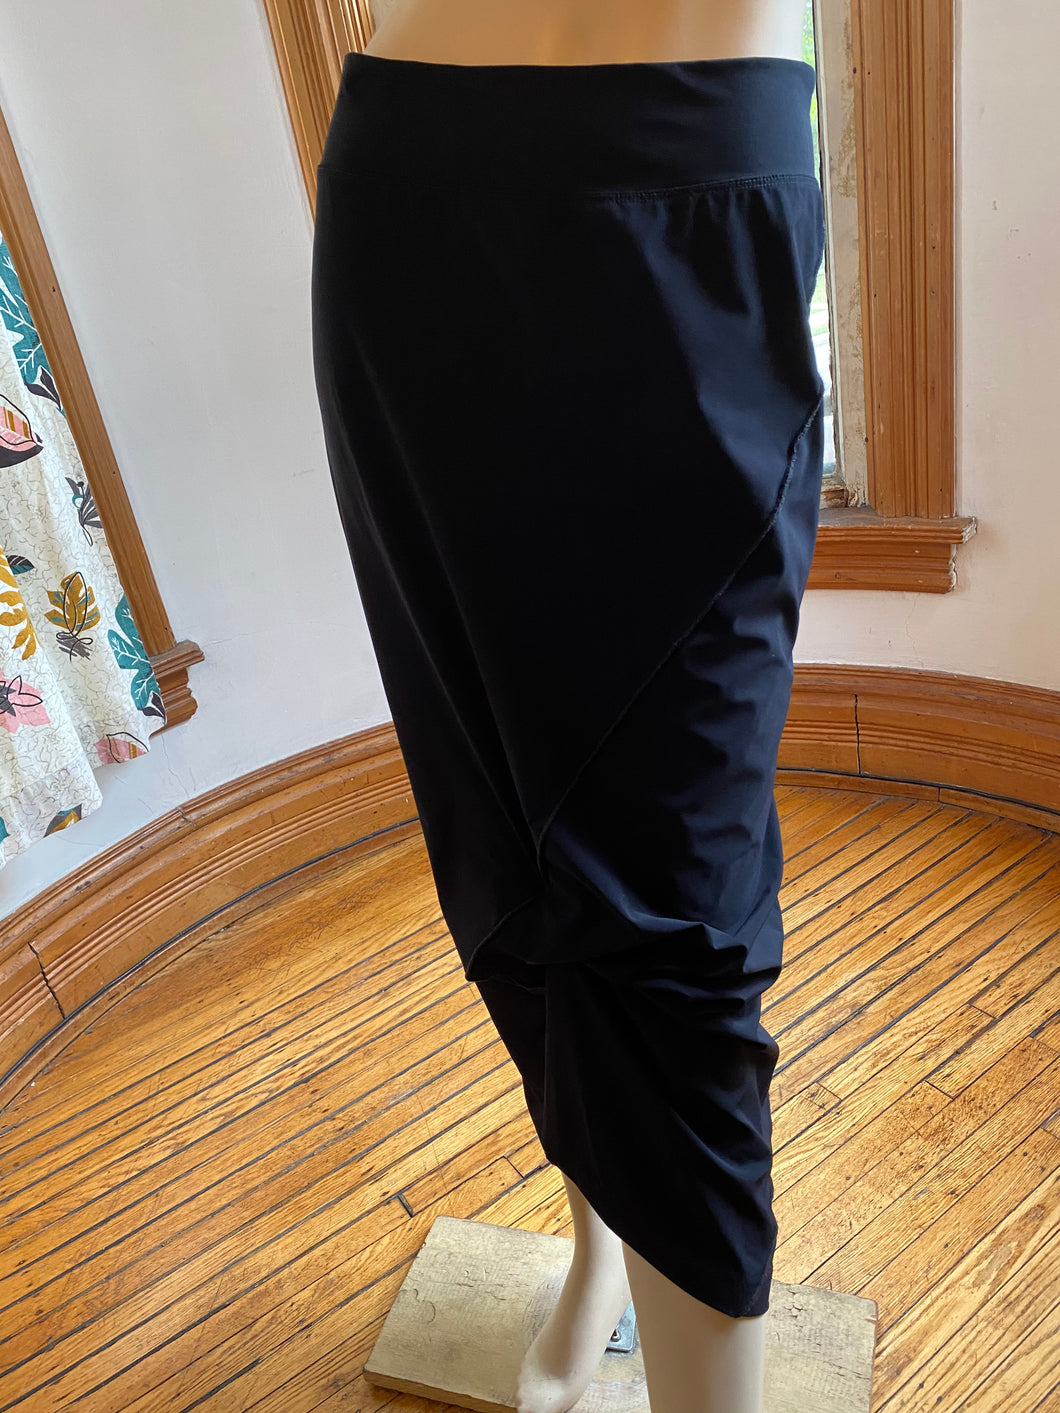 Porto San Francisco Black Sculptural Pull-On Knit Skirt, size S